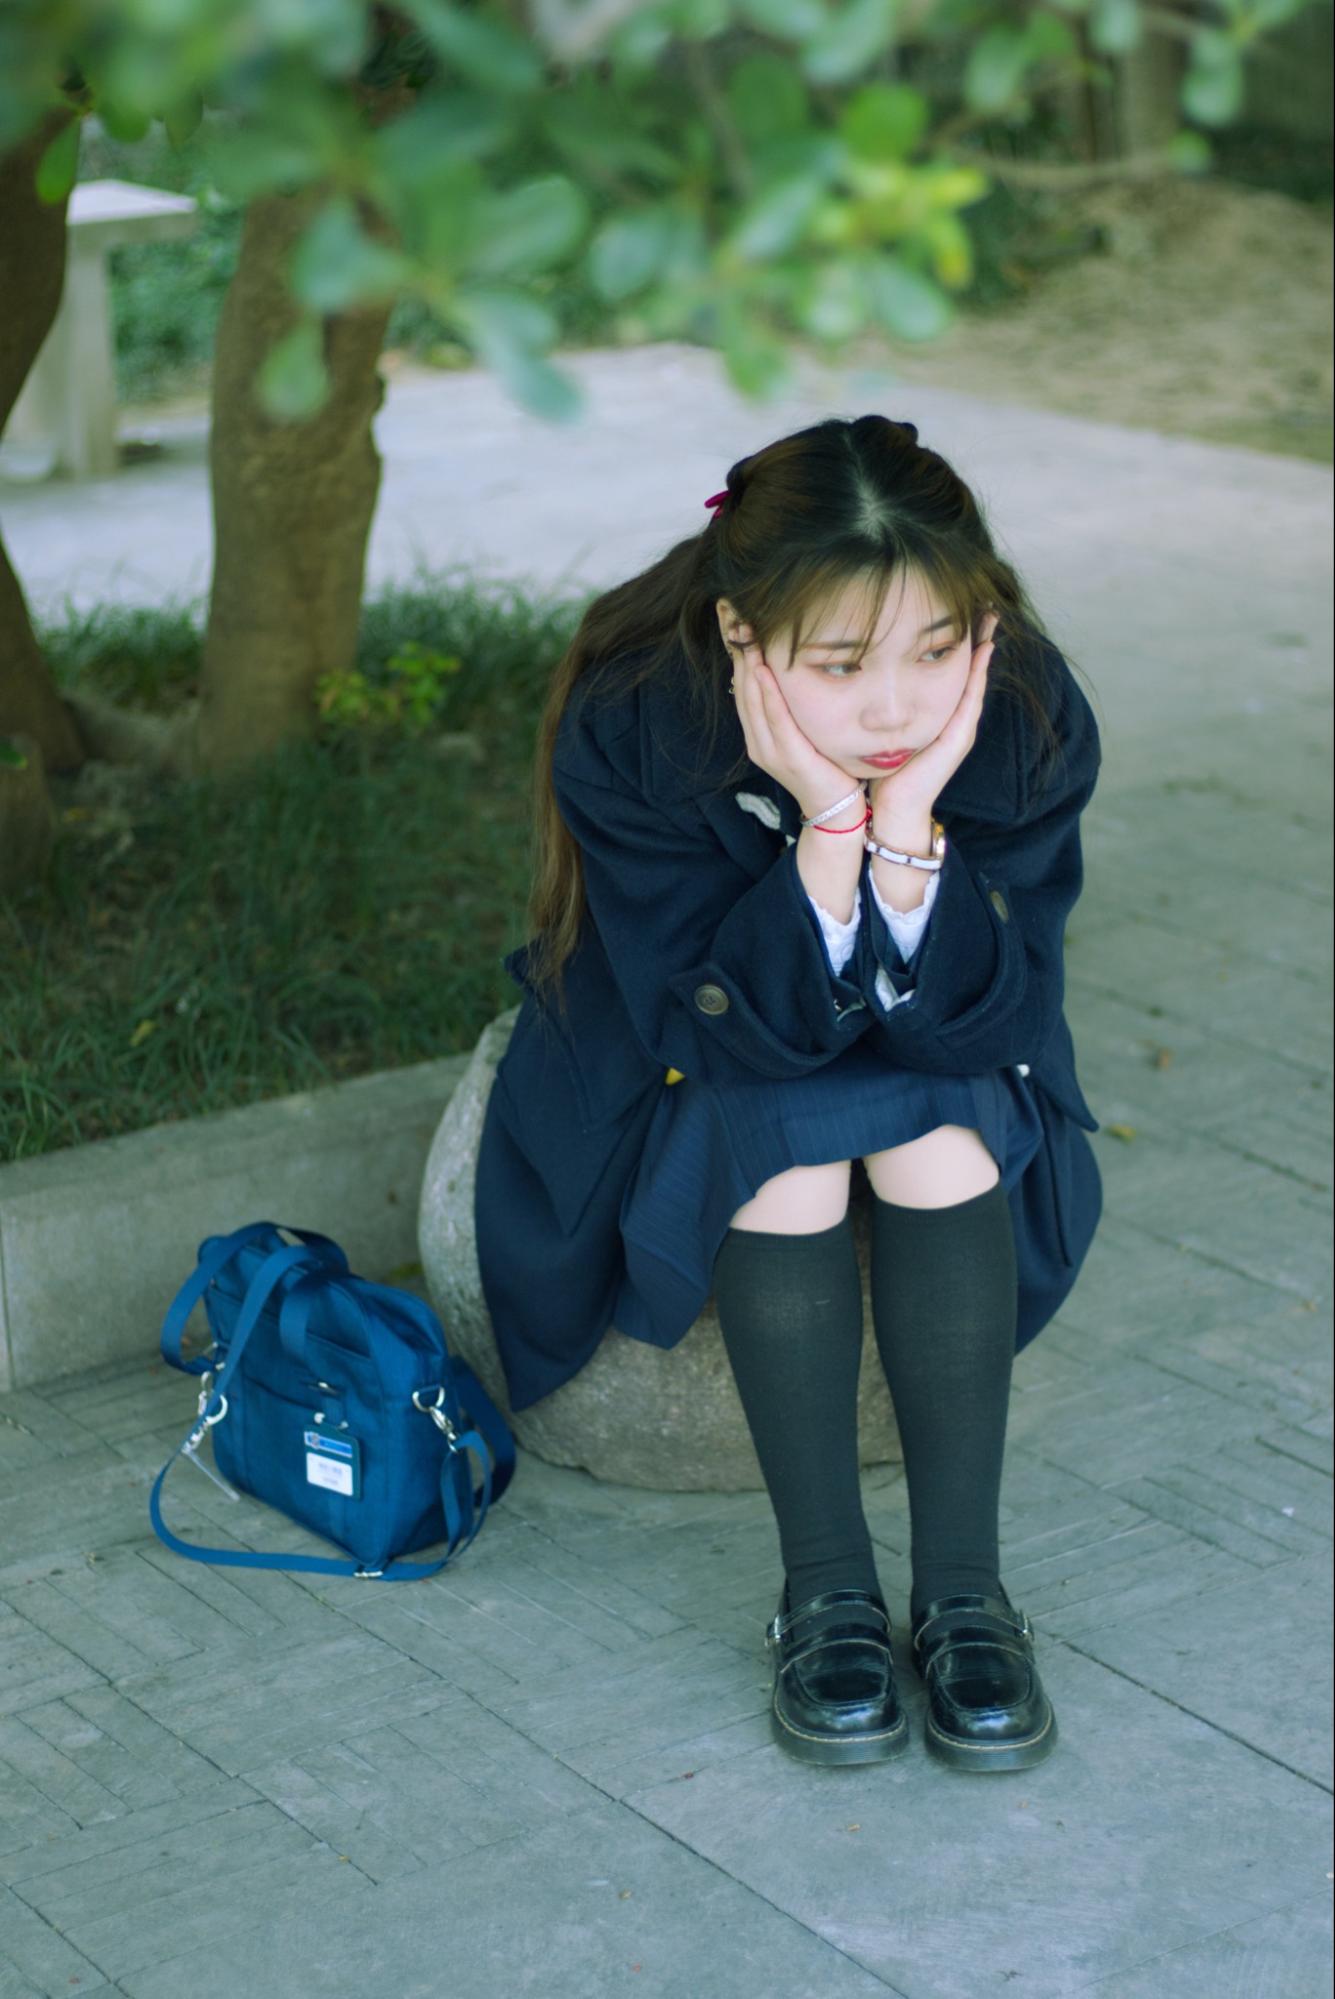 japanese schools ban ponytails - sad girl